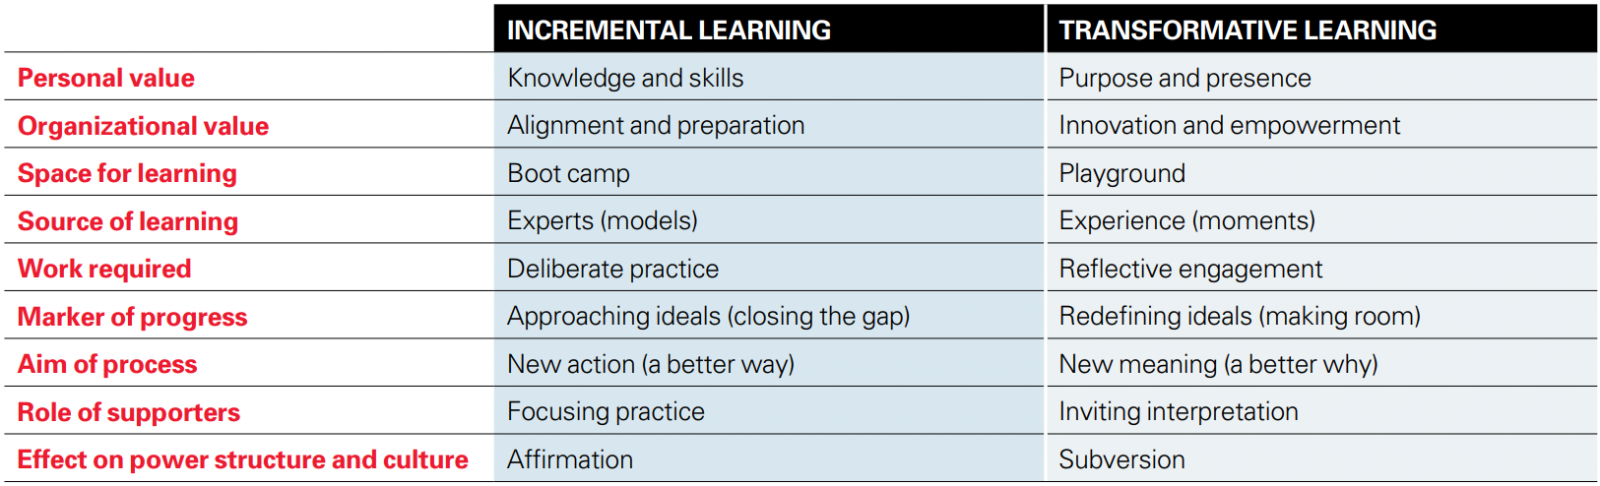 Incremental Versus Transformative Learning